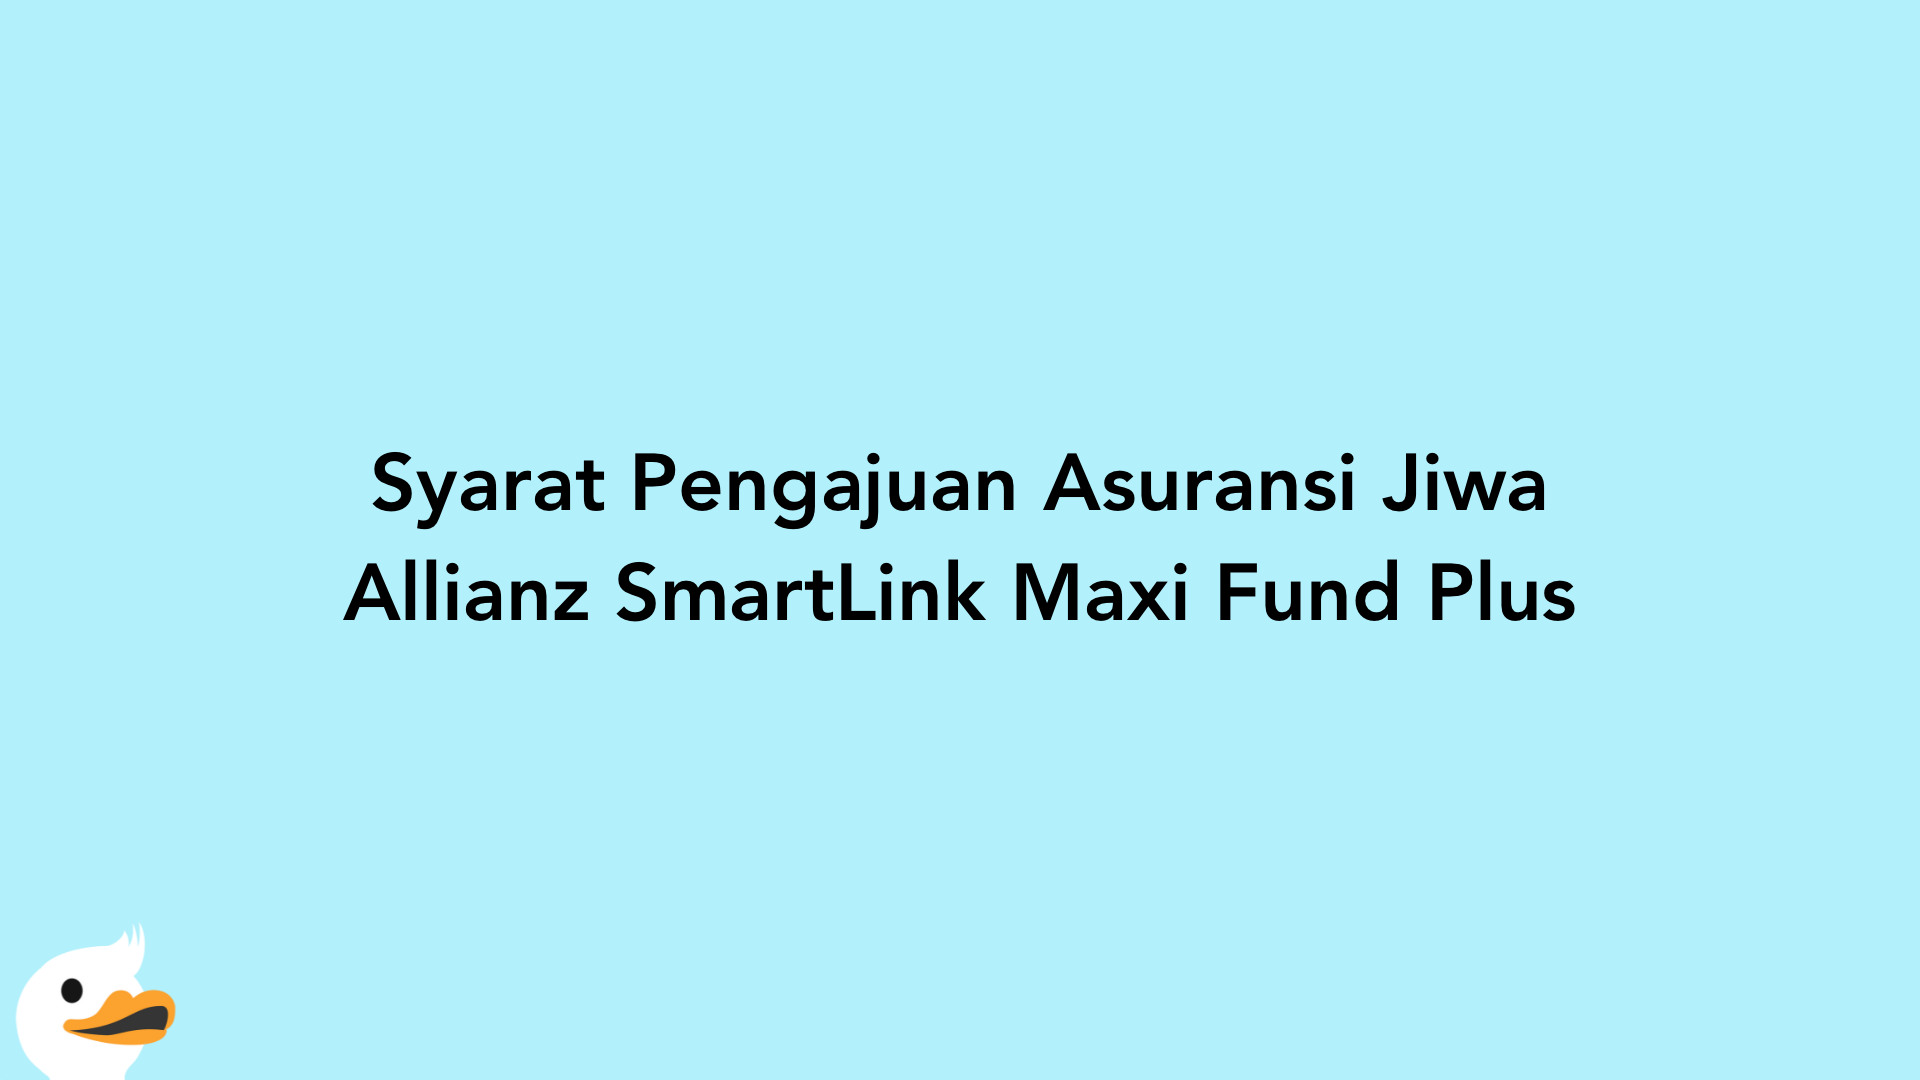 Syarat Pengajuan Asuransi Jiwa Allianz SmartLink Maxi Fund Plus